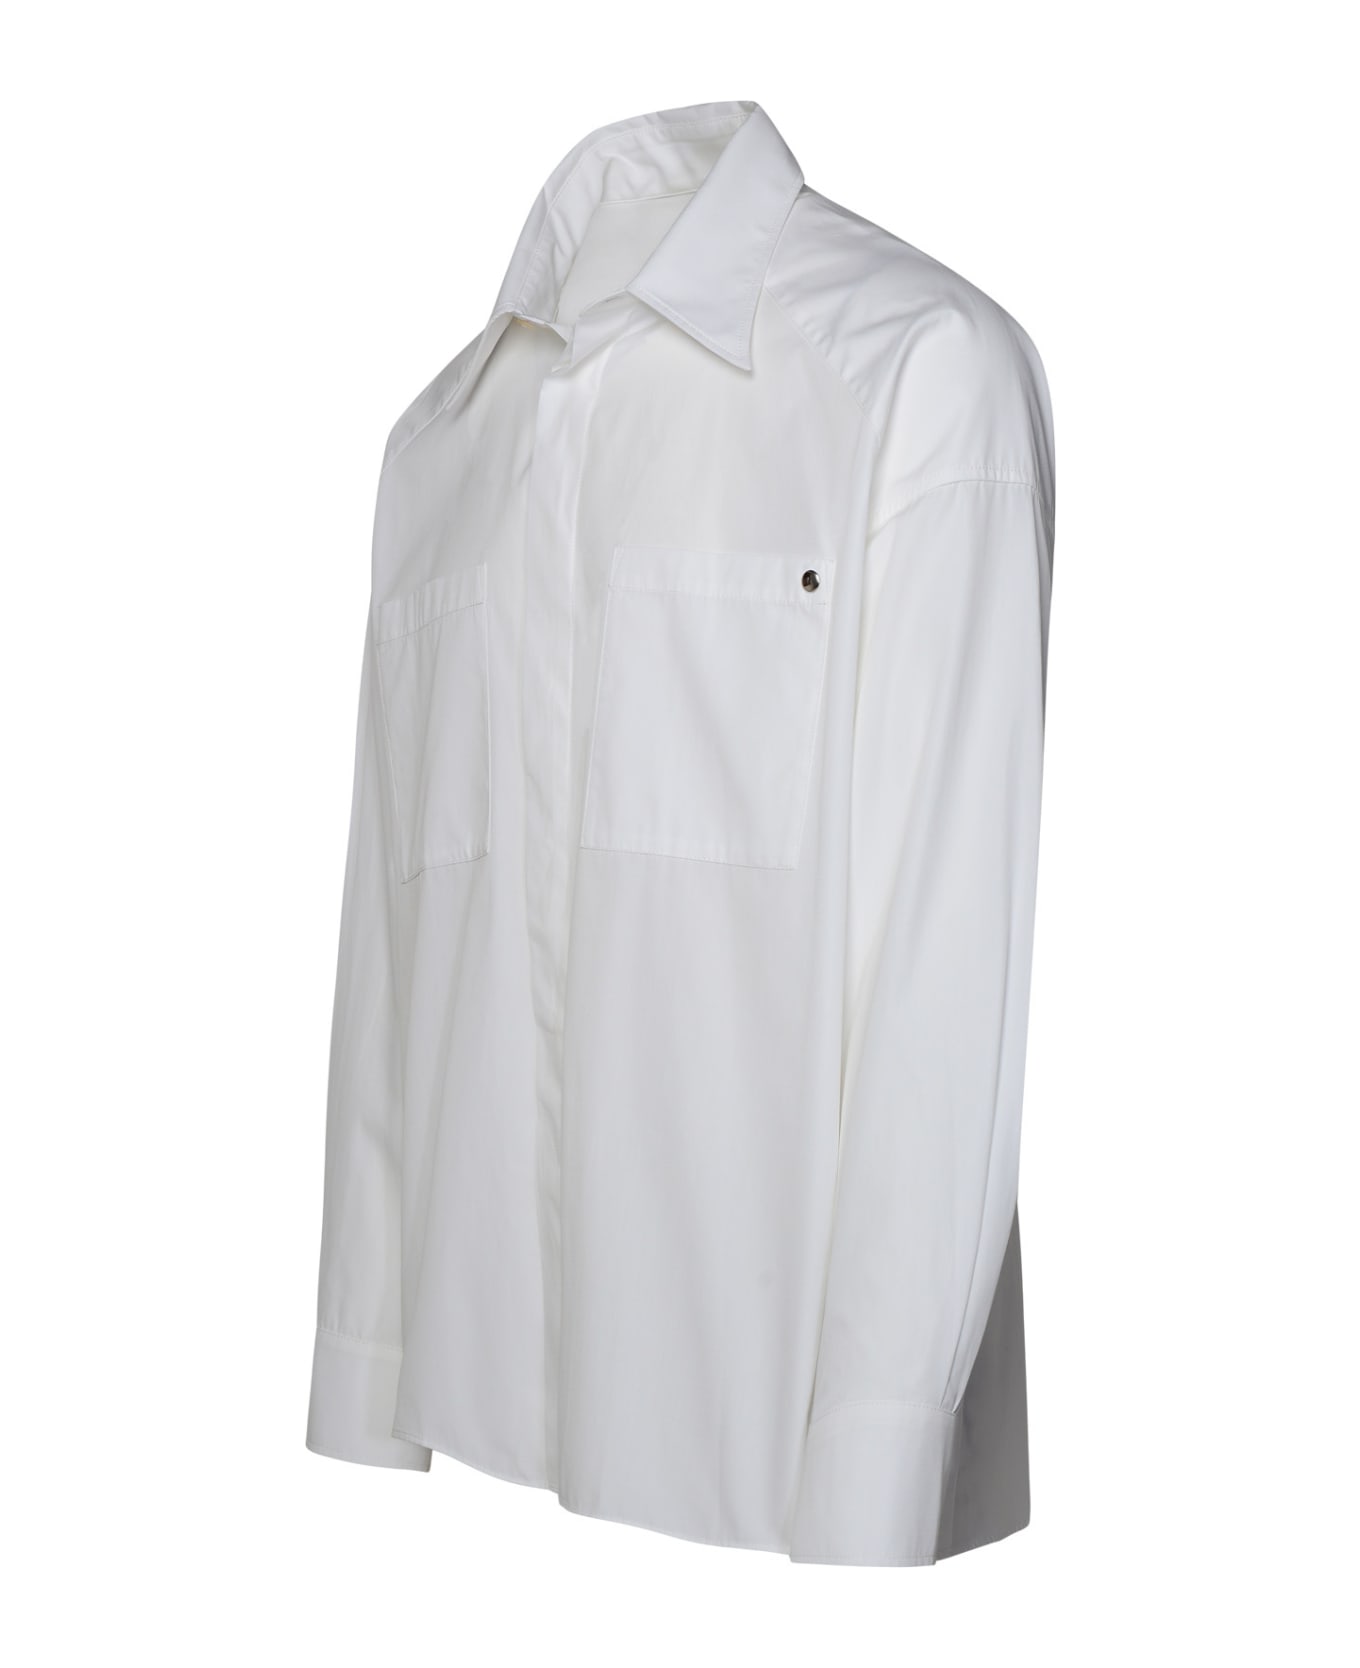 A.P.C. White Cotton Shirt - White